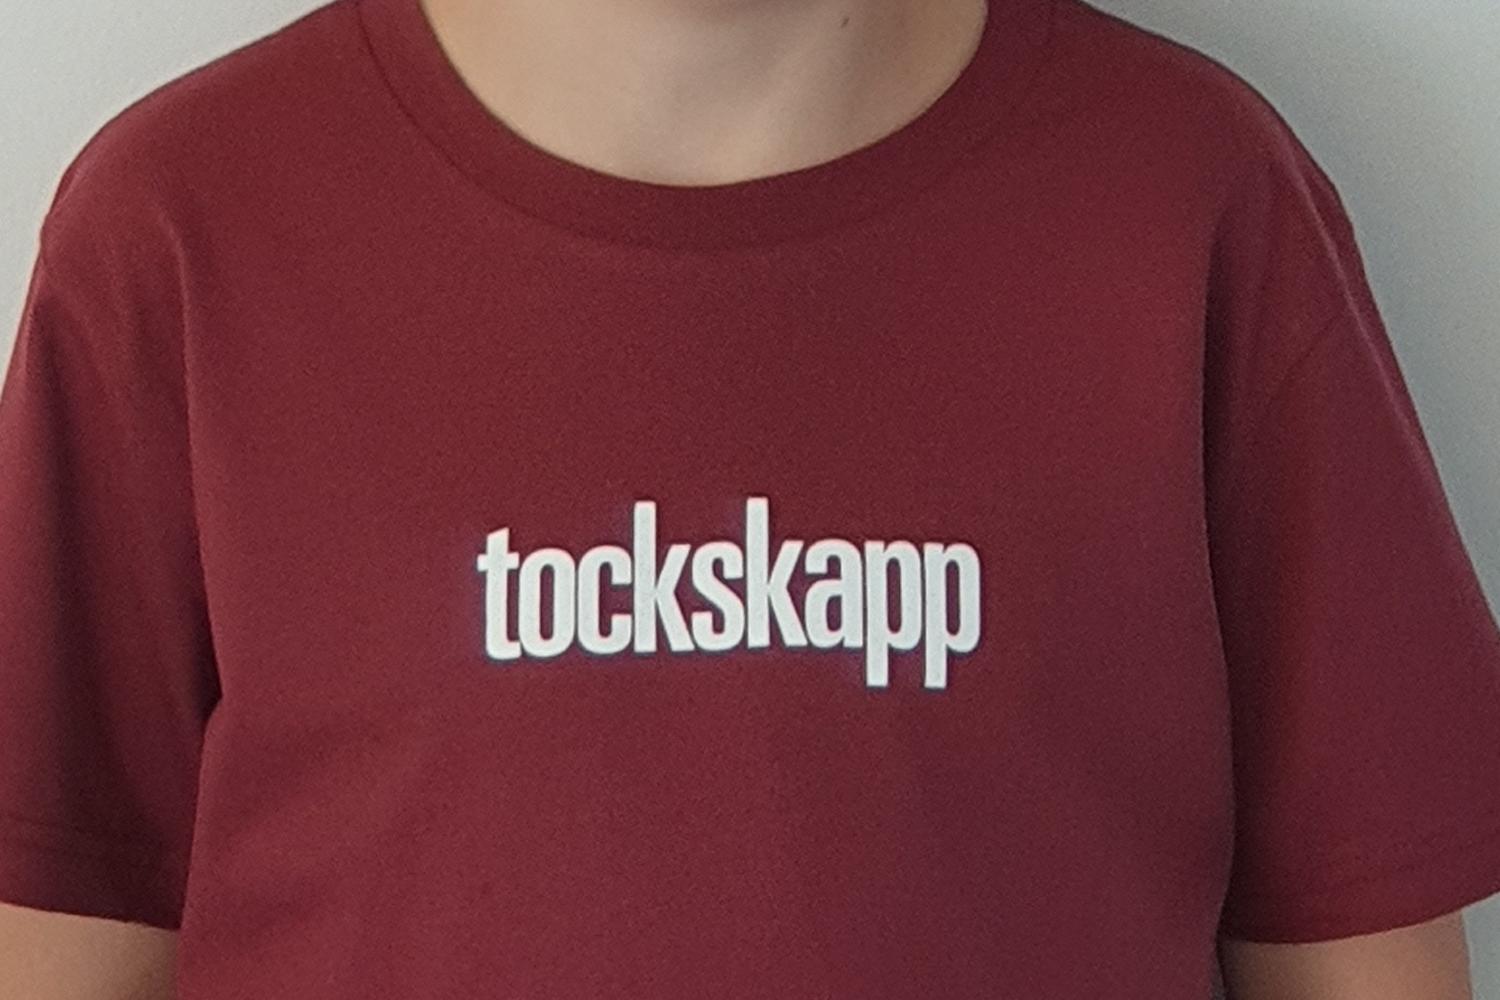 KIDS' T-Shirt 'tockskapp', Shirt colour "burgundy", Print white